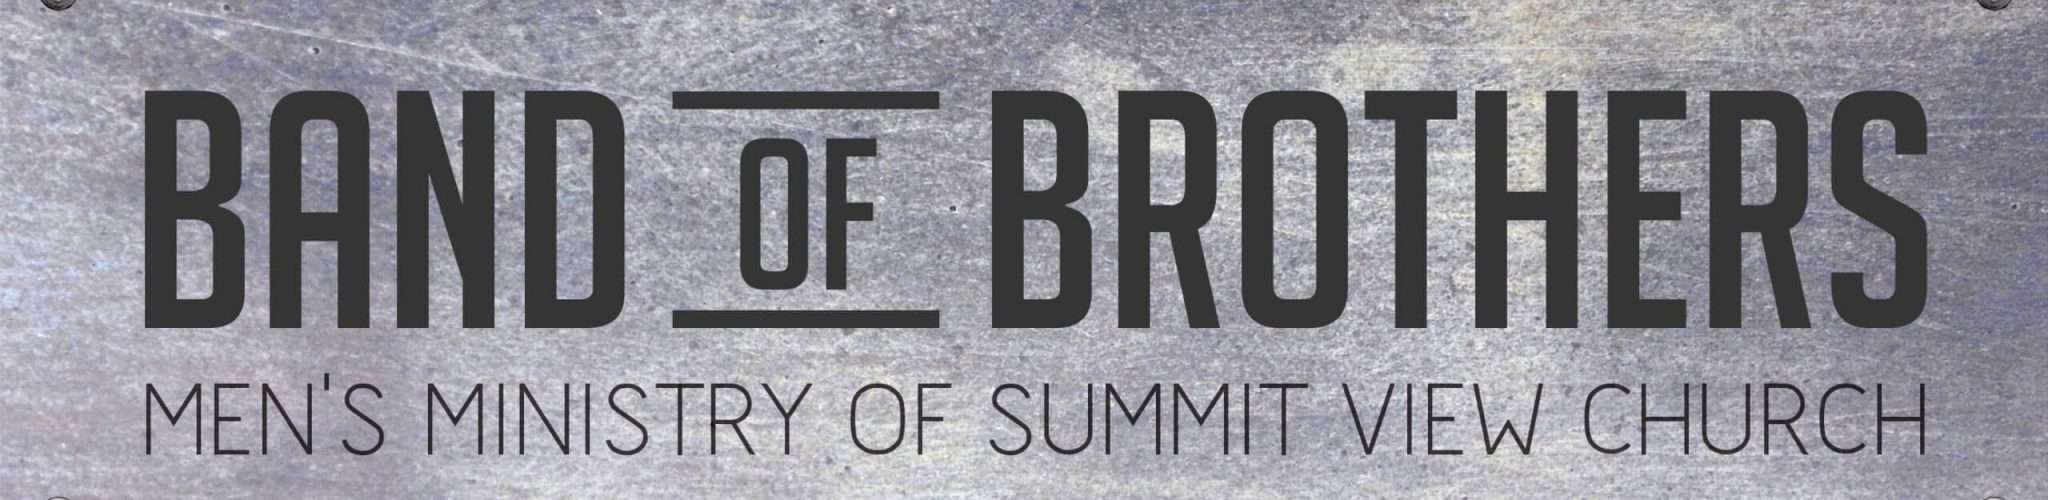 Band-of-Brothers-logo-sliver-metal